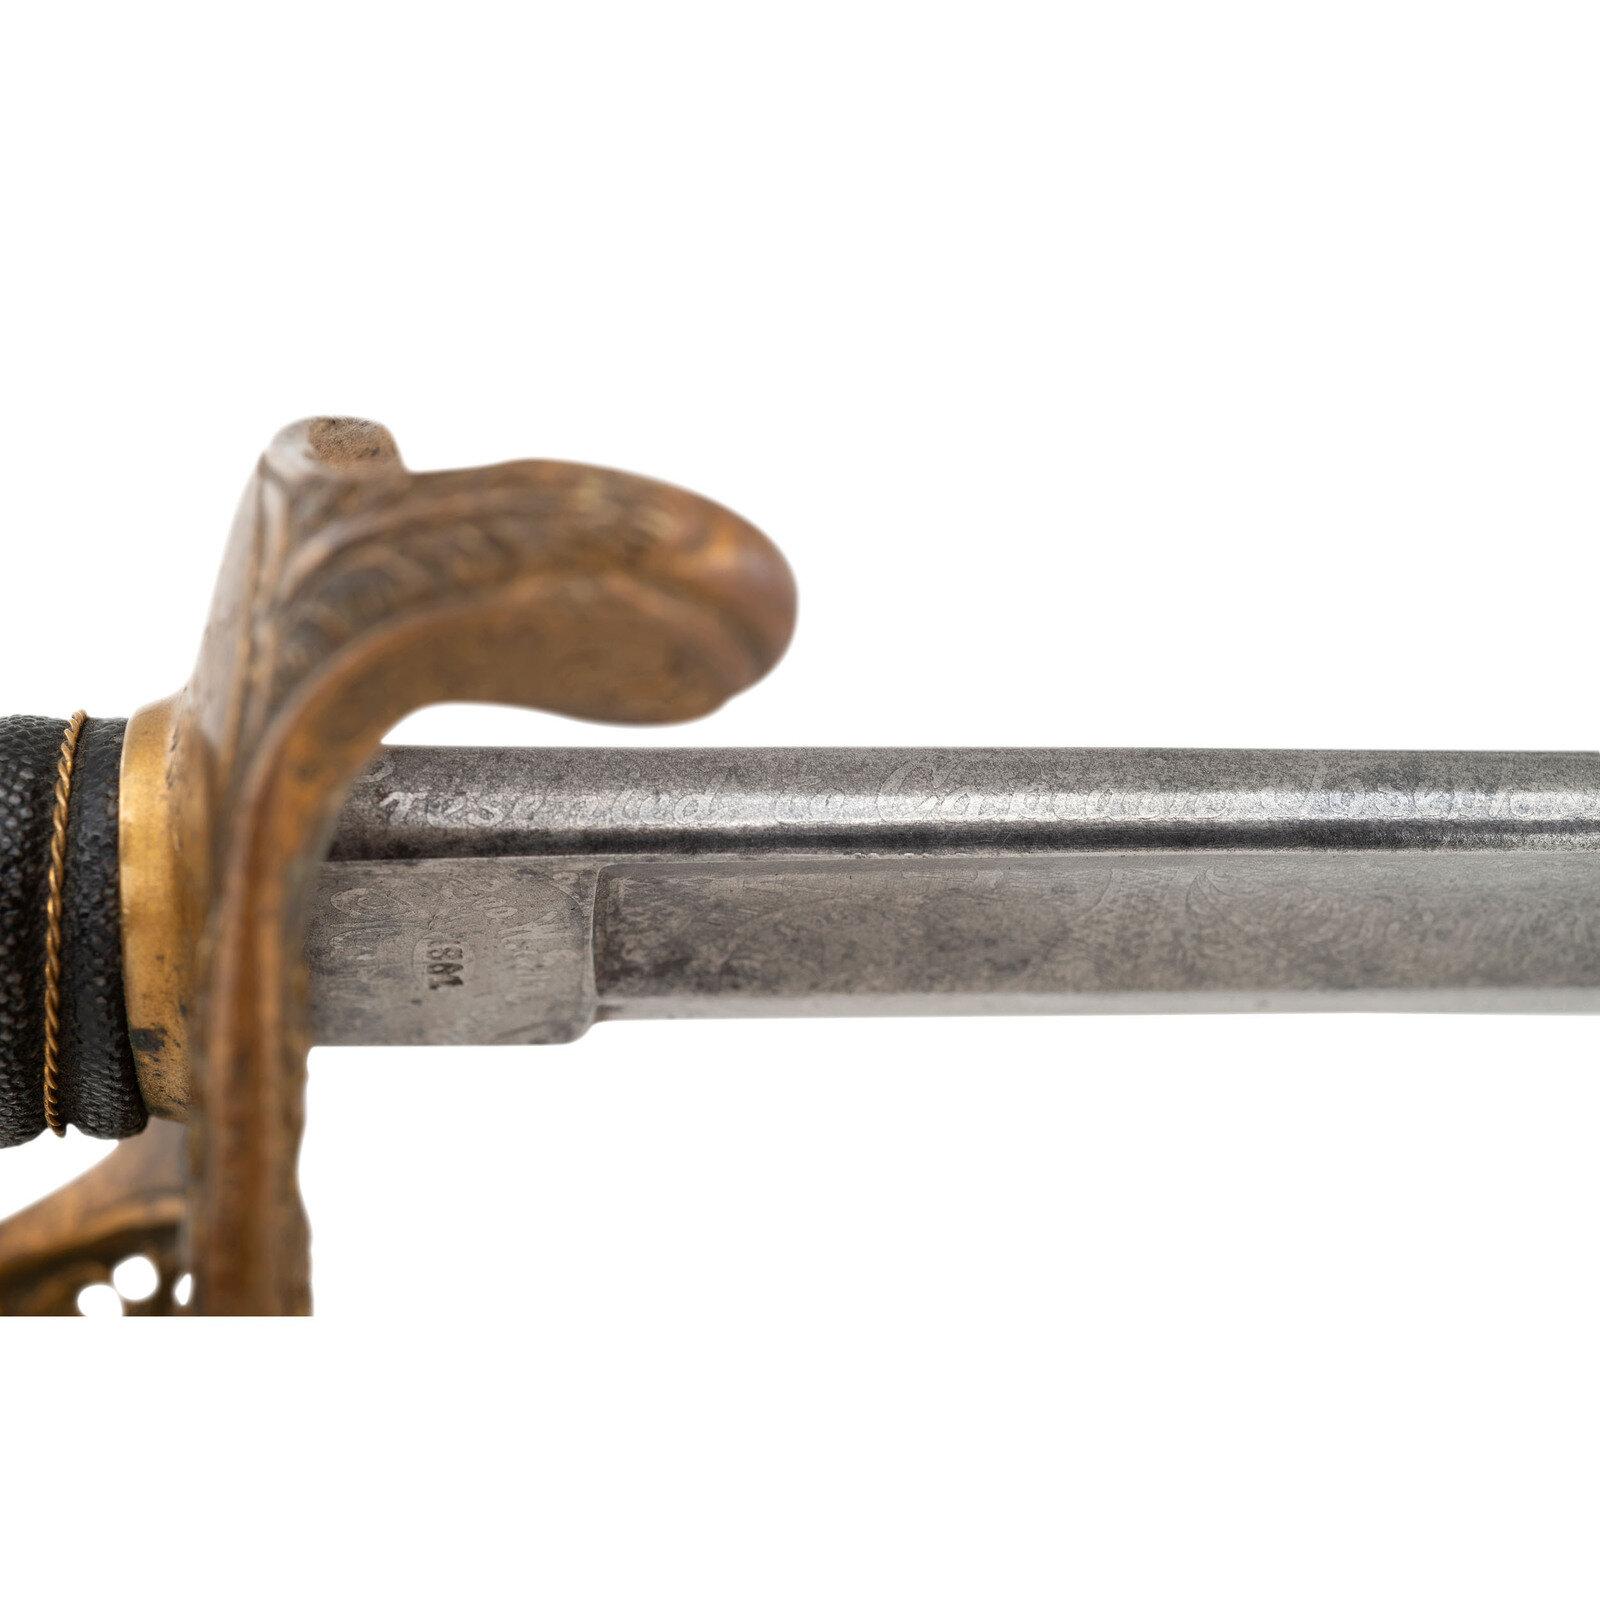 G.W. Simons & Bro. Retailed Collins Model 1850 Foot Officer's Sword of Capt. Joseph Vaughan